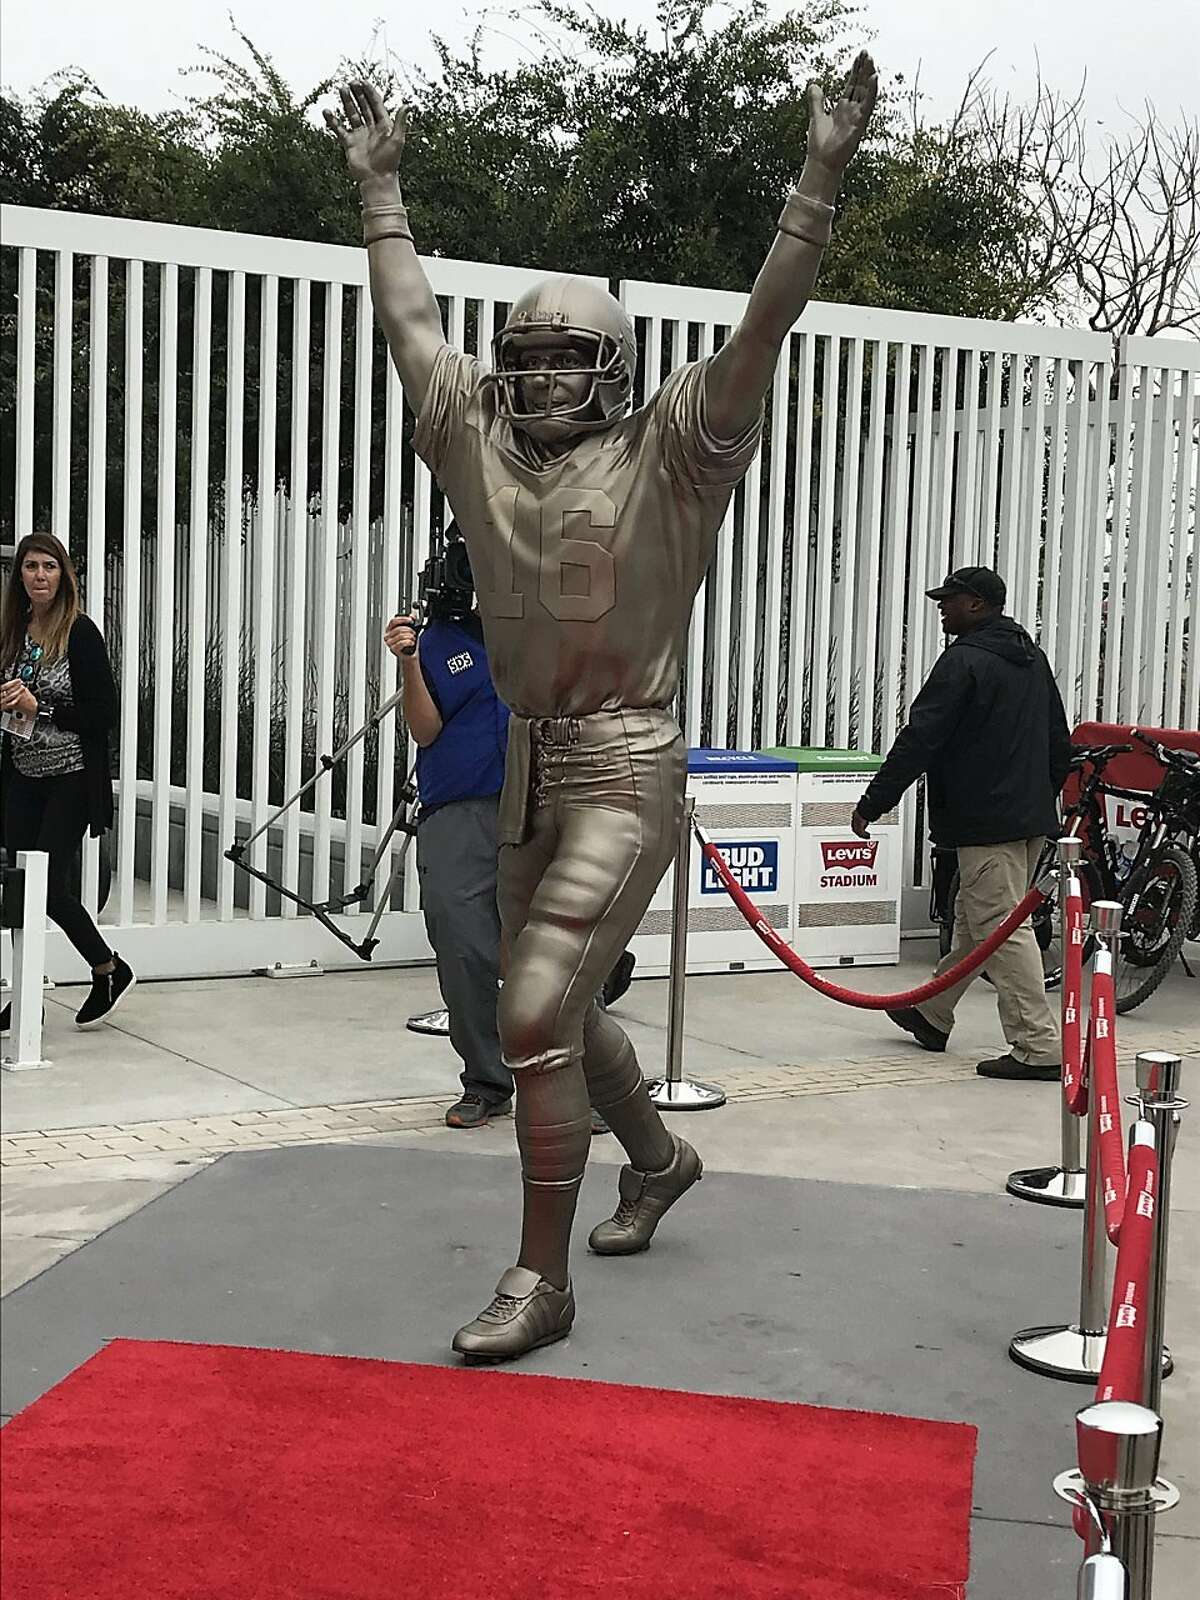 Statue of Joe Montana.